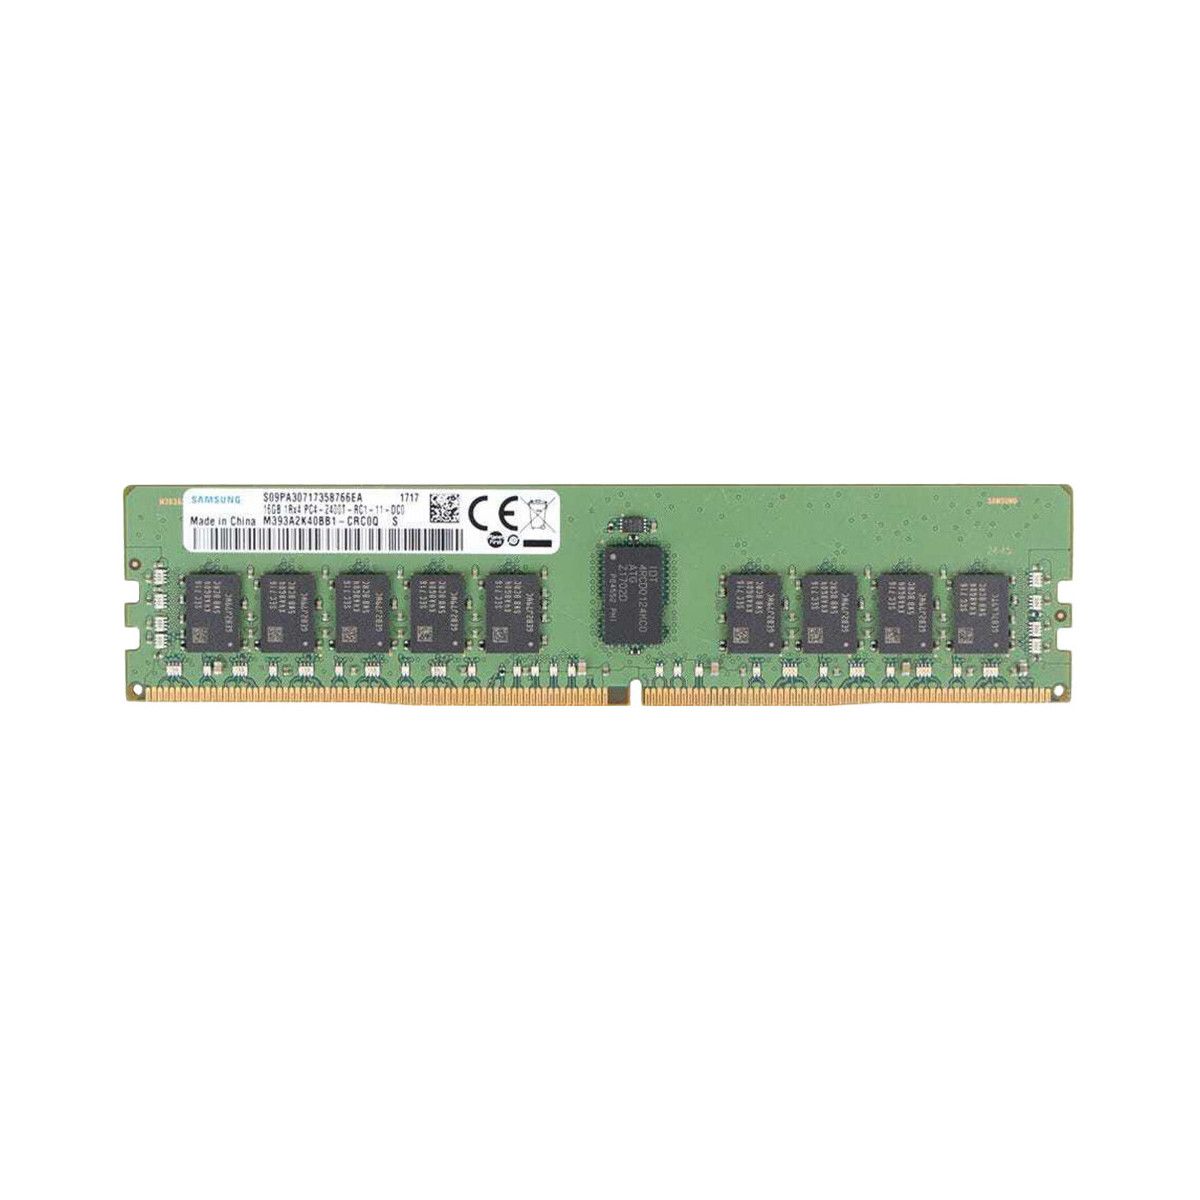 A8711887-MS - Memstar 1x 16GB DDR4-2400 RDIMM PC4-19200T-R - Mem-Star Compatible OEM Memoria 1 - Memstar 